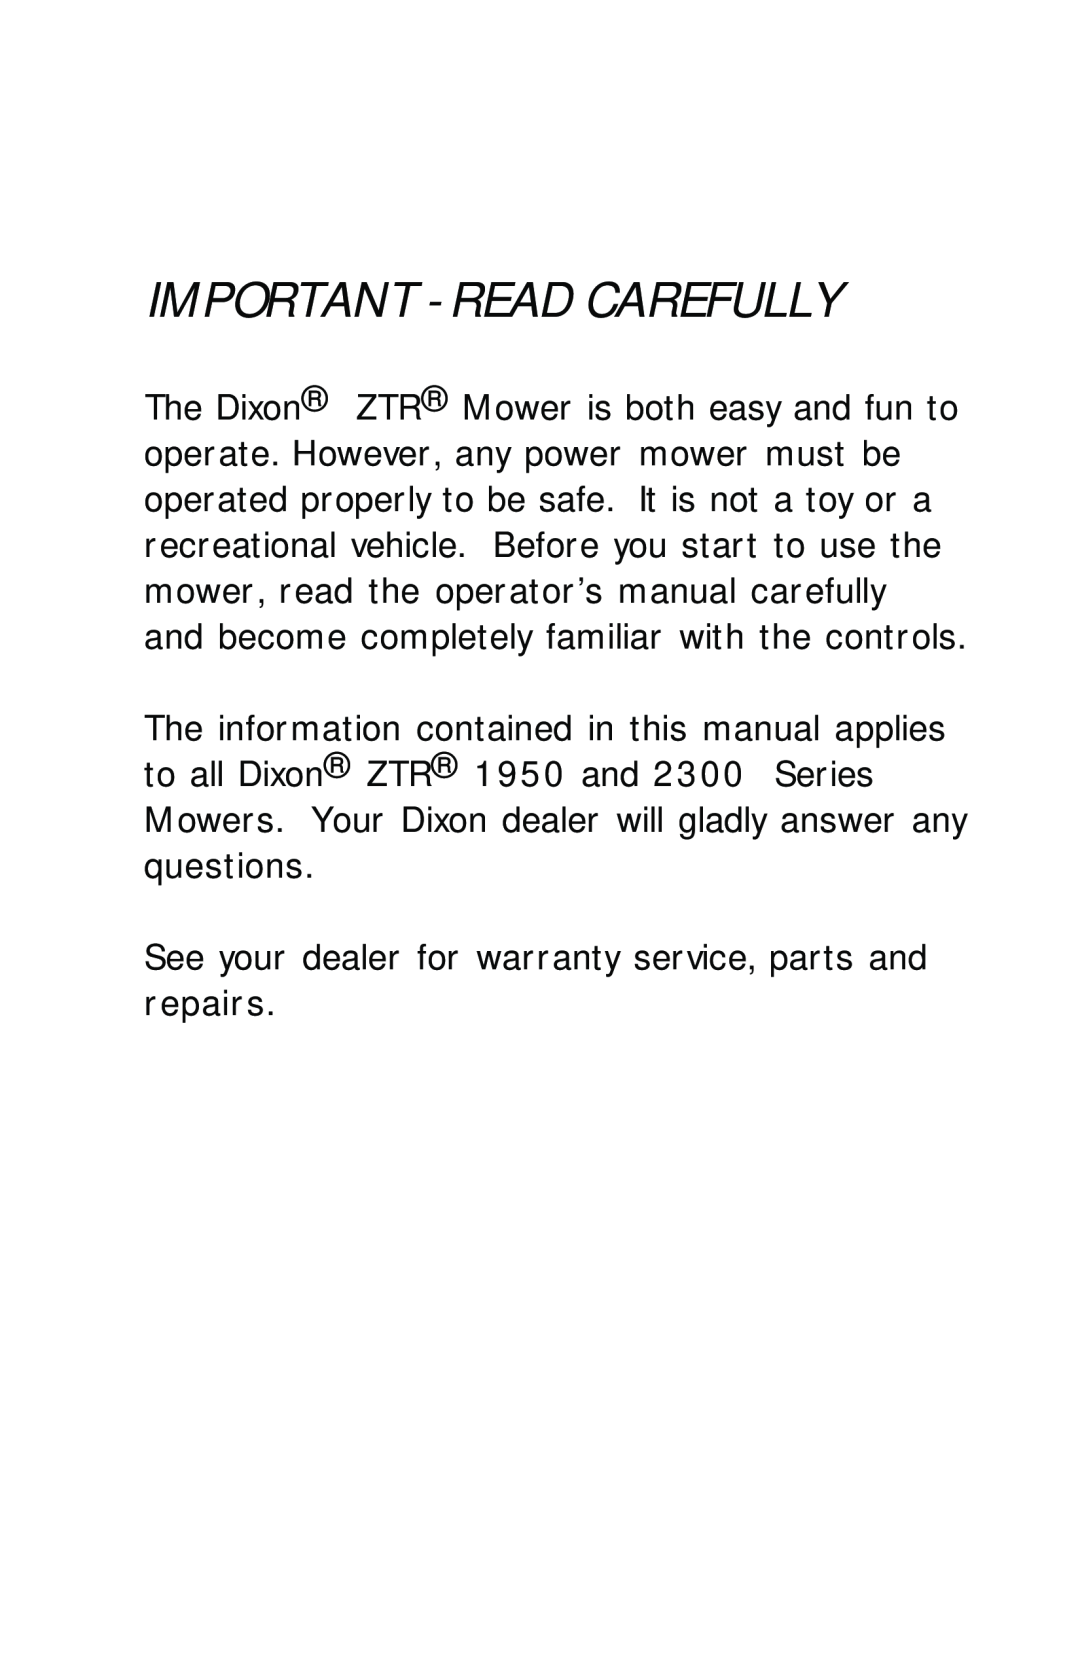 Dixon ZTR 2300 manual Important - Read Carefully 